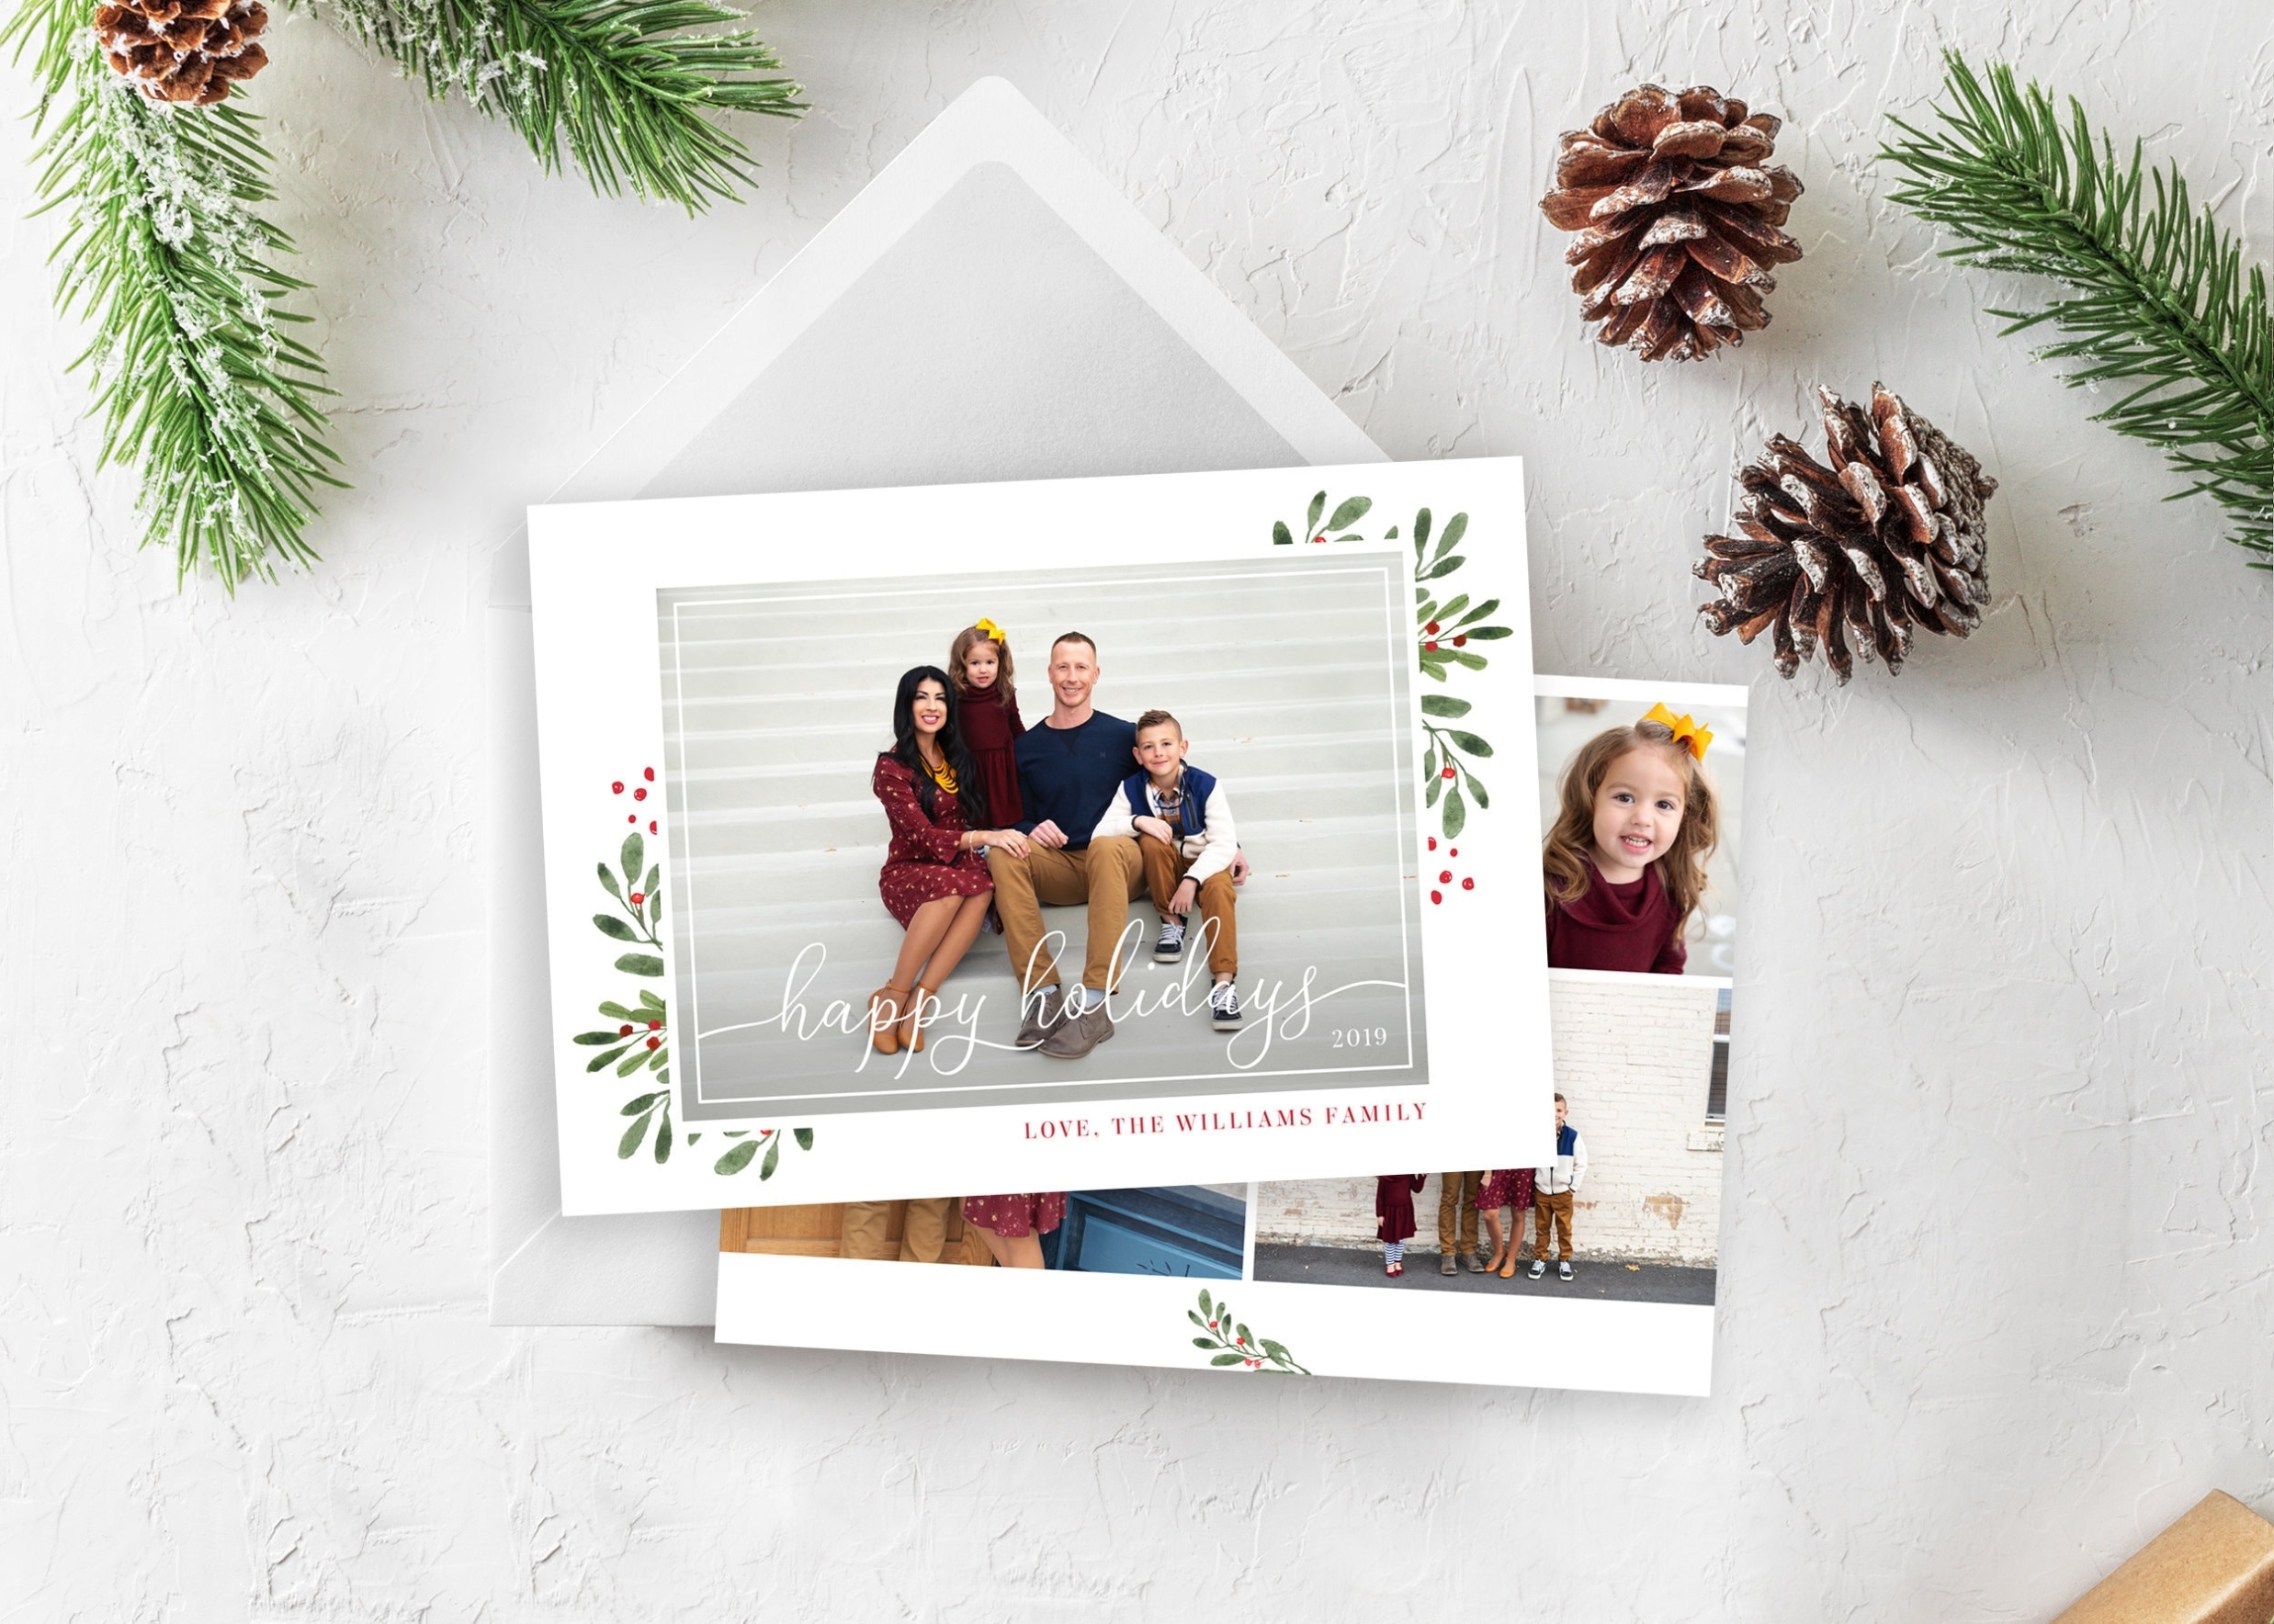 Happy Holidays Card Template - Christmas Card Template - Floral Christmas Card Template - Photo With Free Christmas Card Templates For Photographers